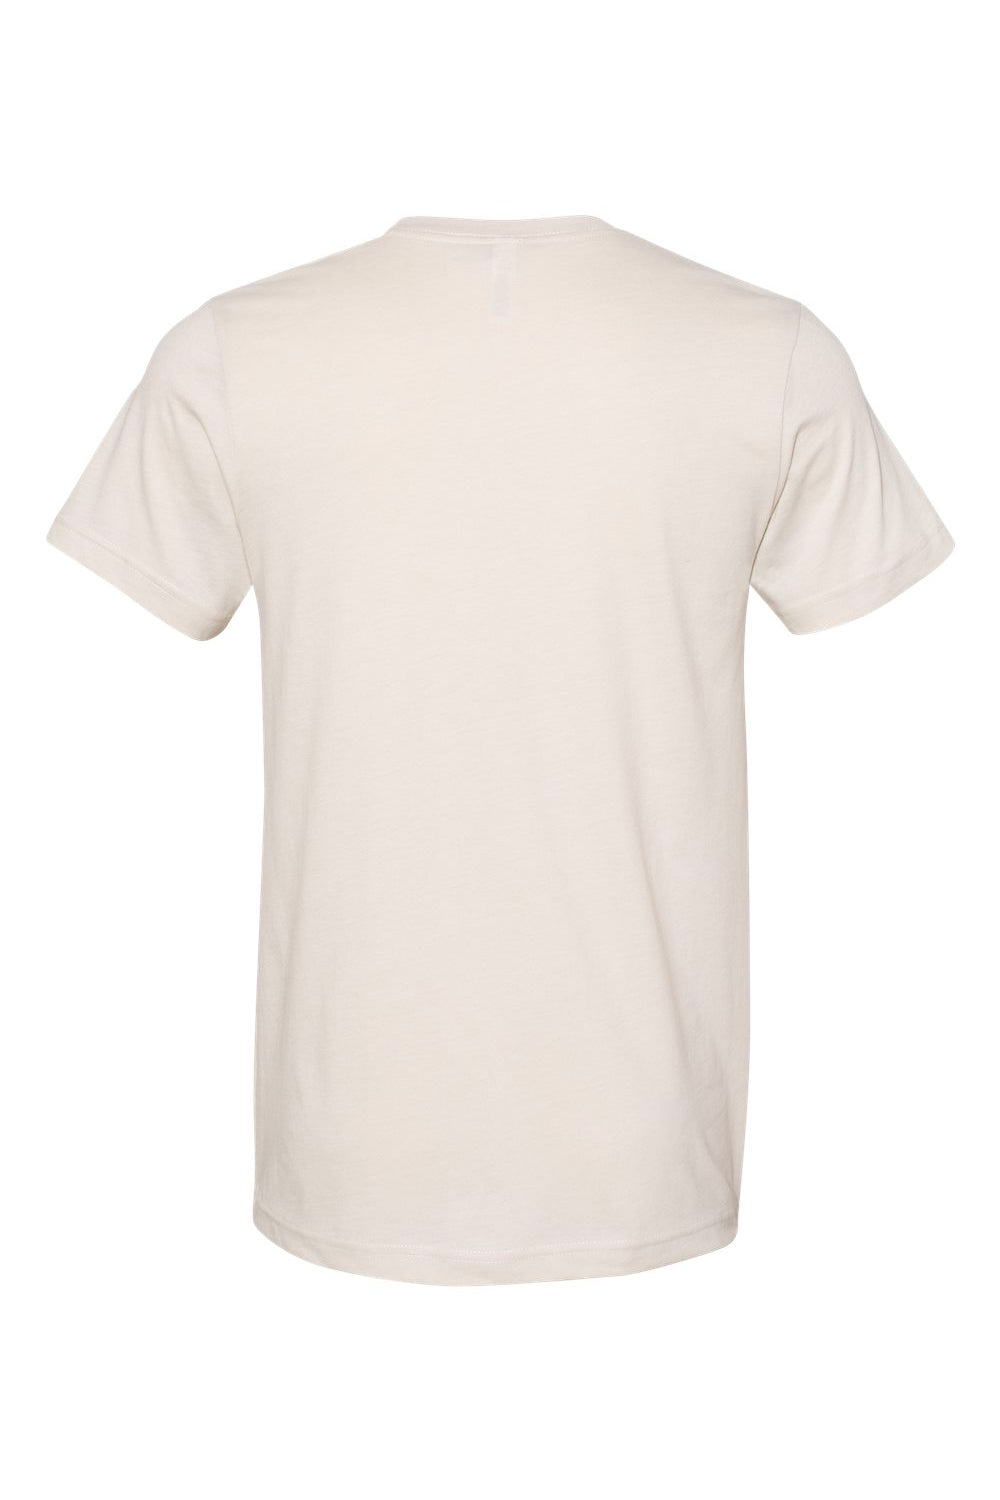 Bella + Canvas BC3301/3301C/3301 Mens Jersey Short Sleeve Crewneck T-Shirt Heather Dust Flat Back